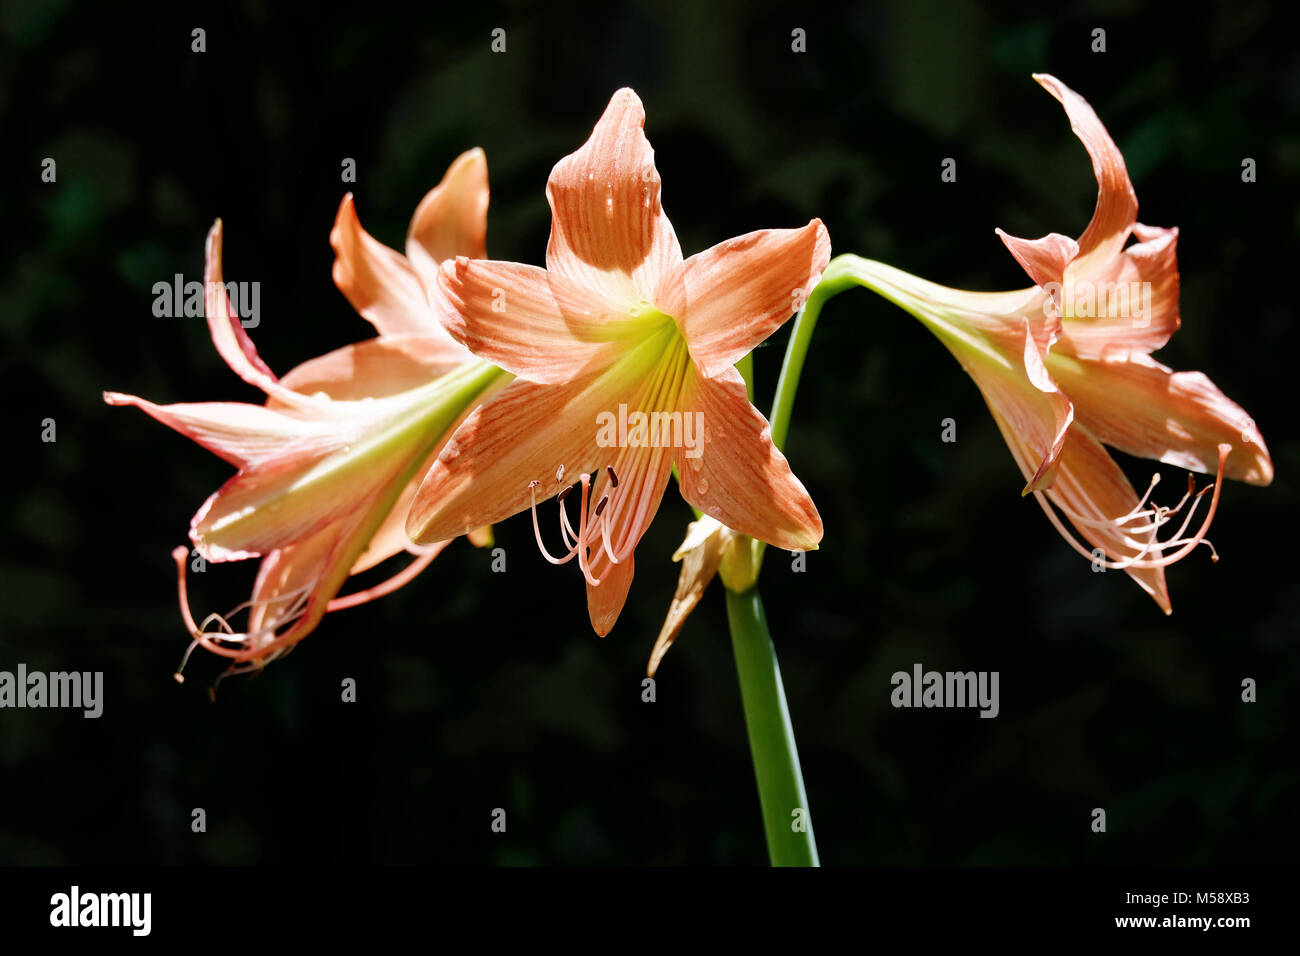 Three Amaryllis flowers in the black background Stock Photo